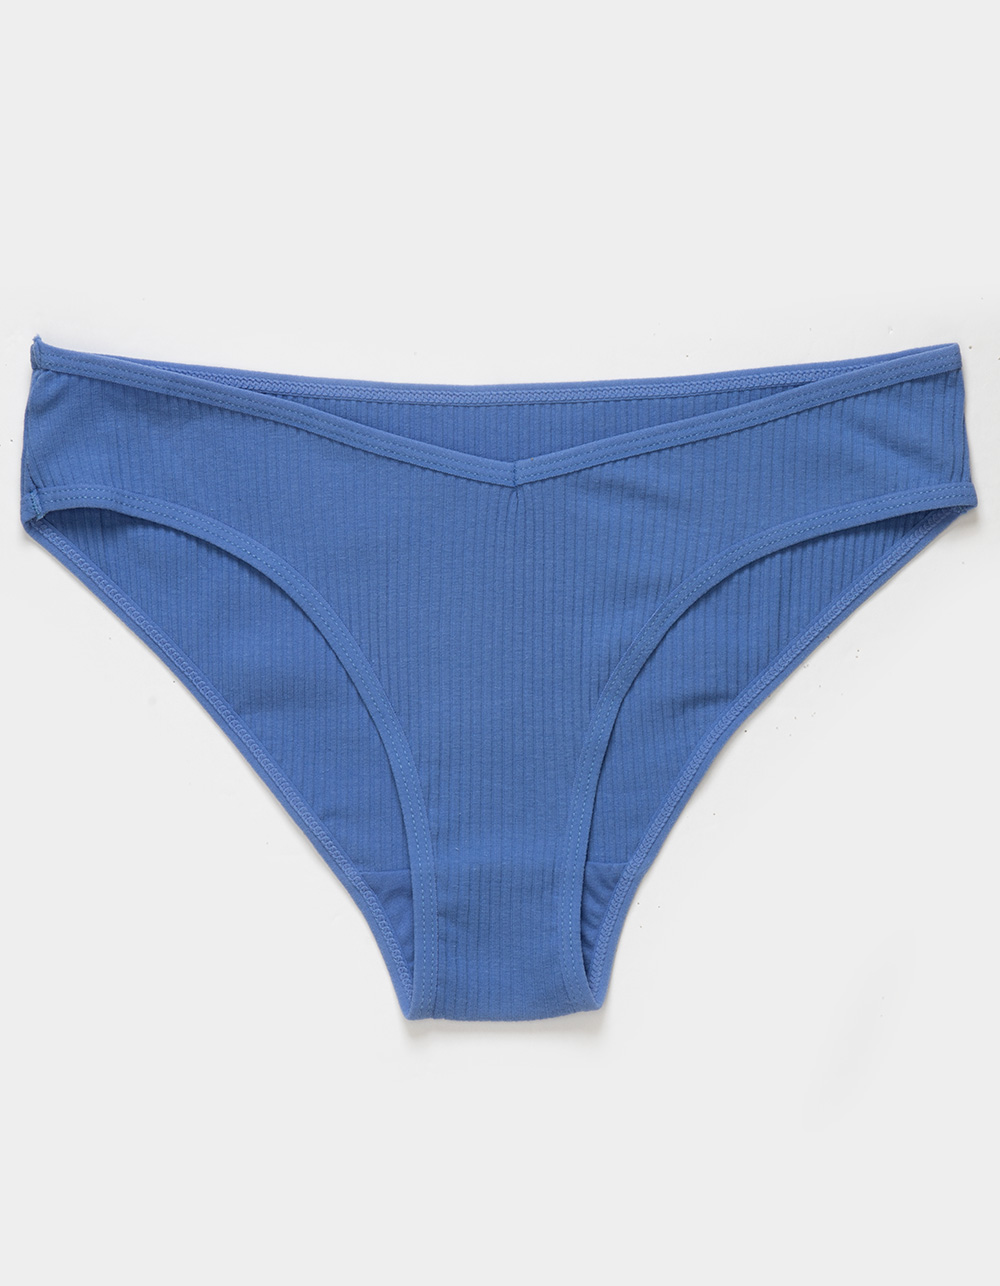 New Hot PLAYBOY Darling Ribbed Panties Women Underwear Panty Blue Size XS